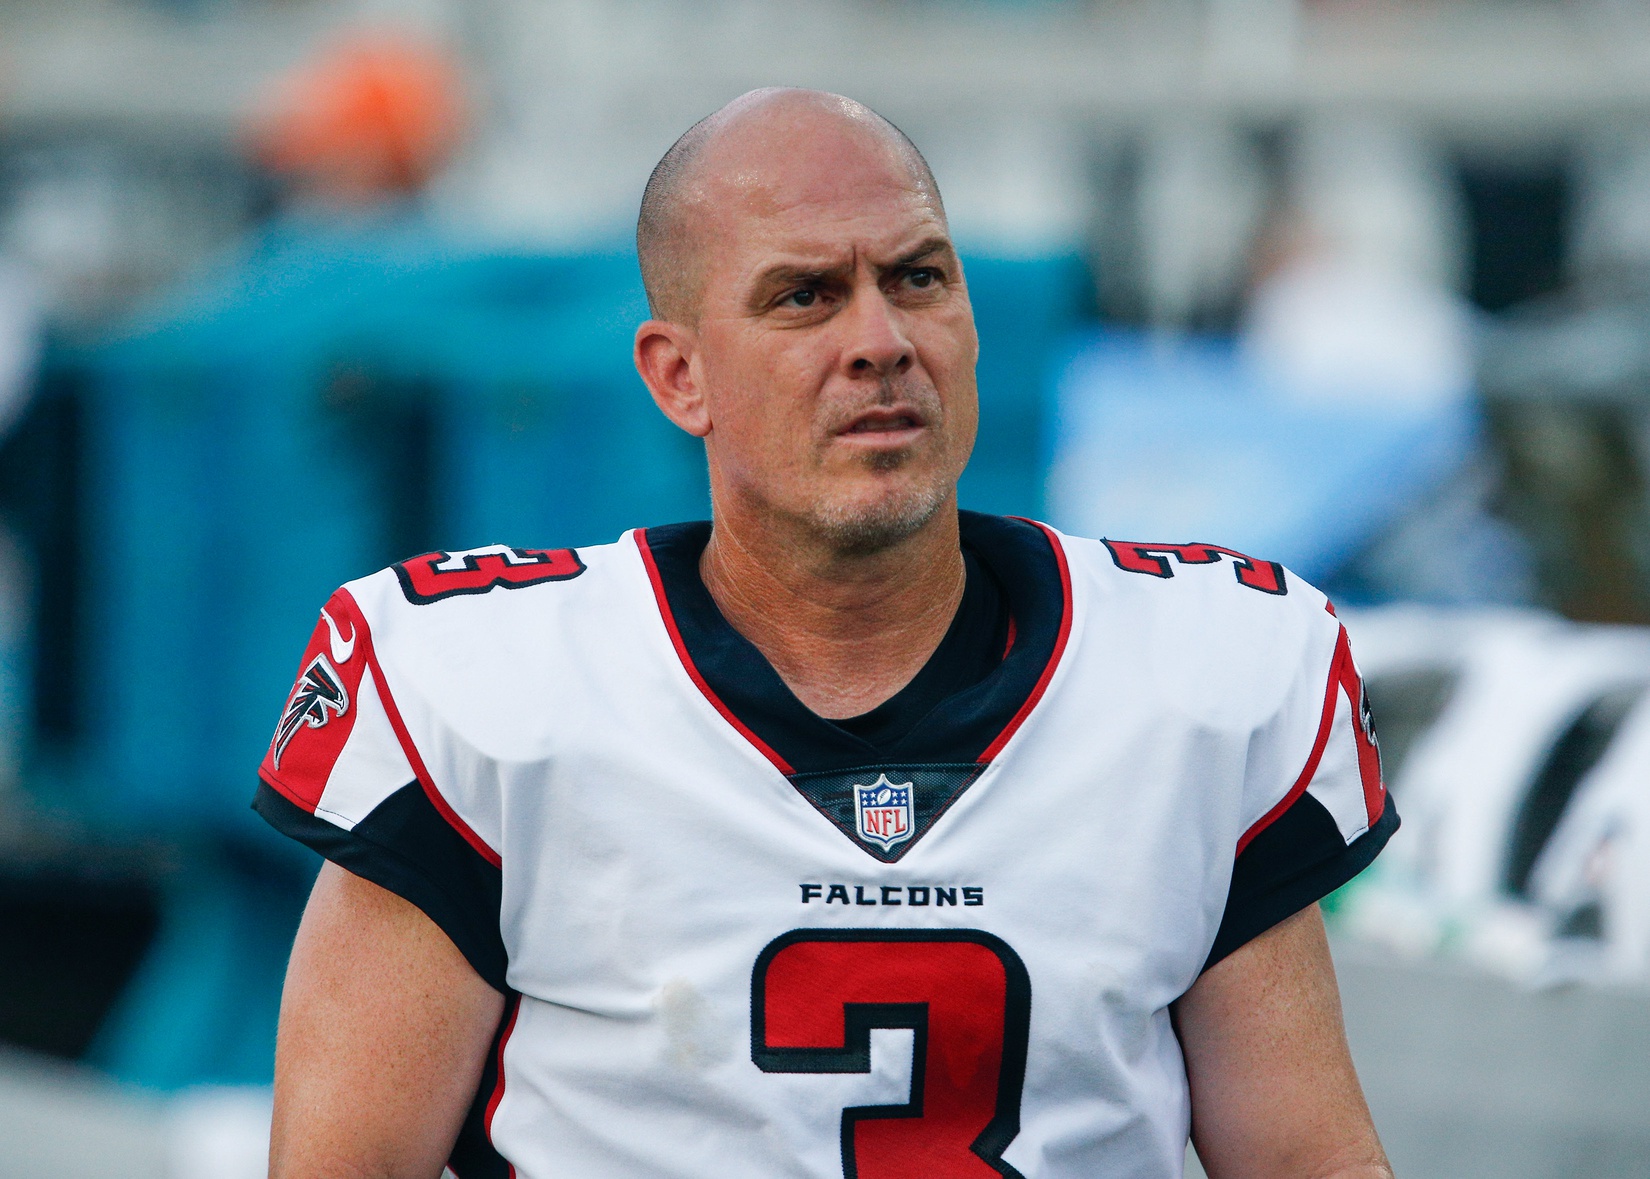 Falcons sign 44-year-old K Matt Bryant